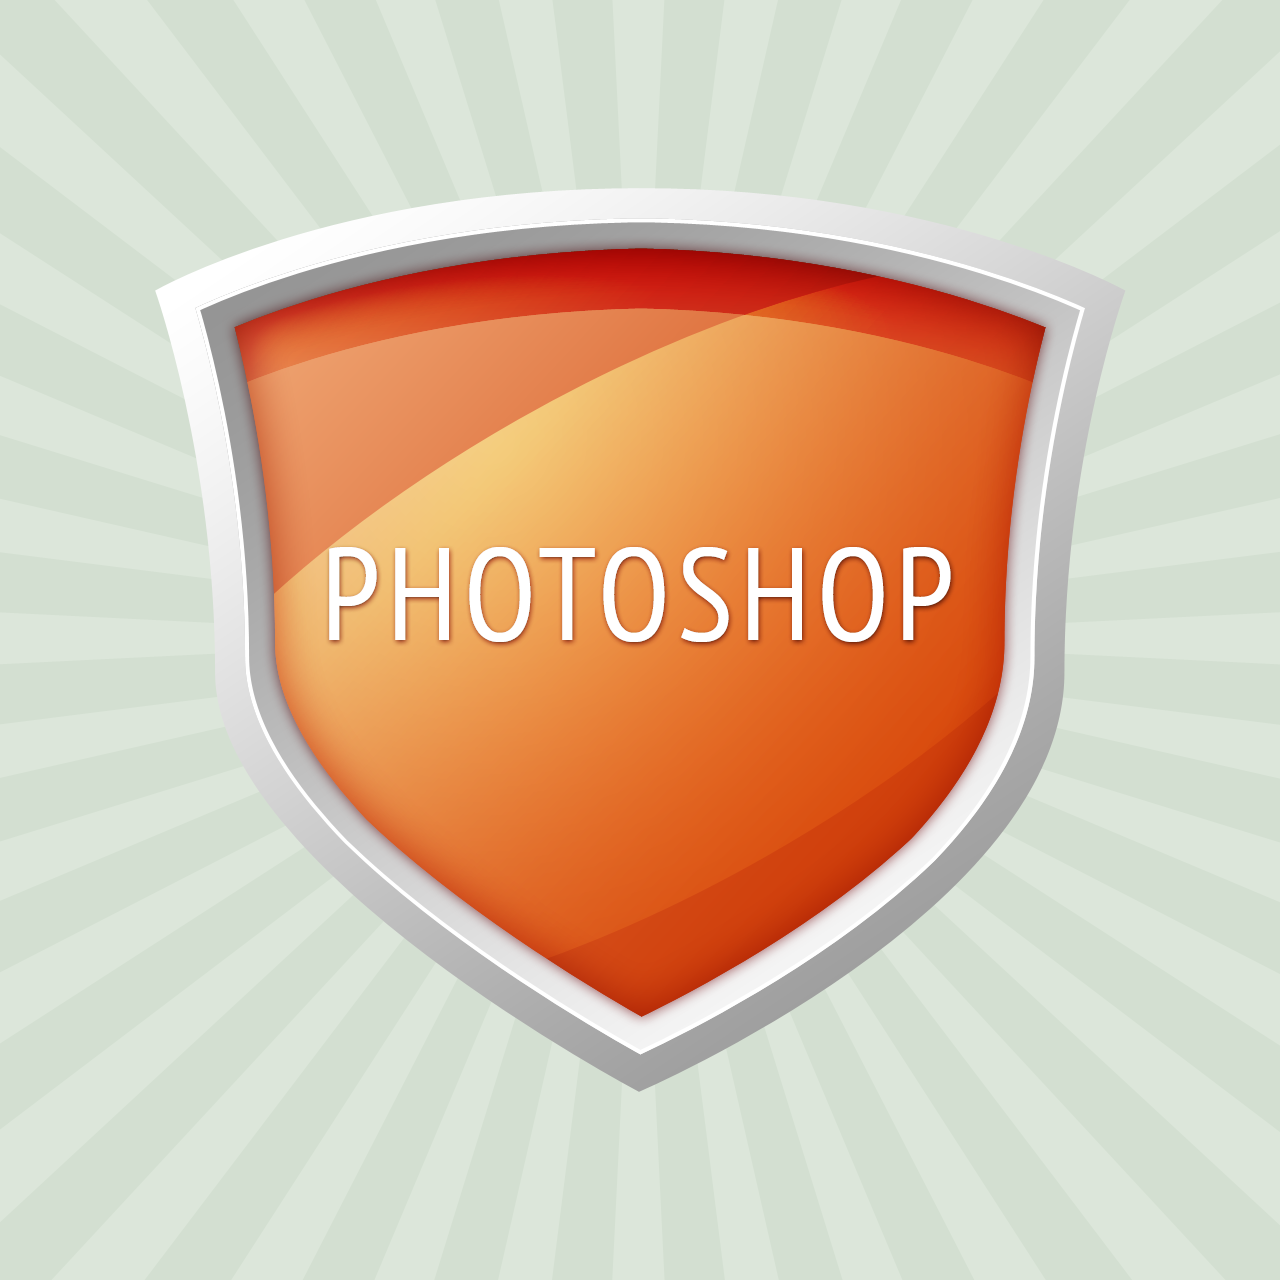 Photoshop Shield Symbols